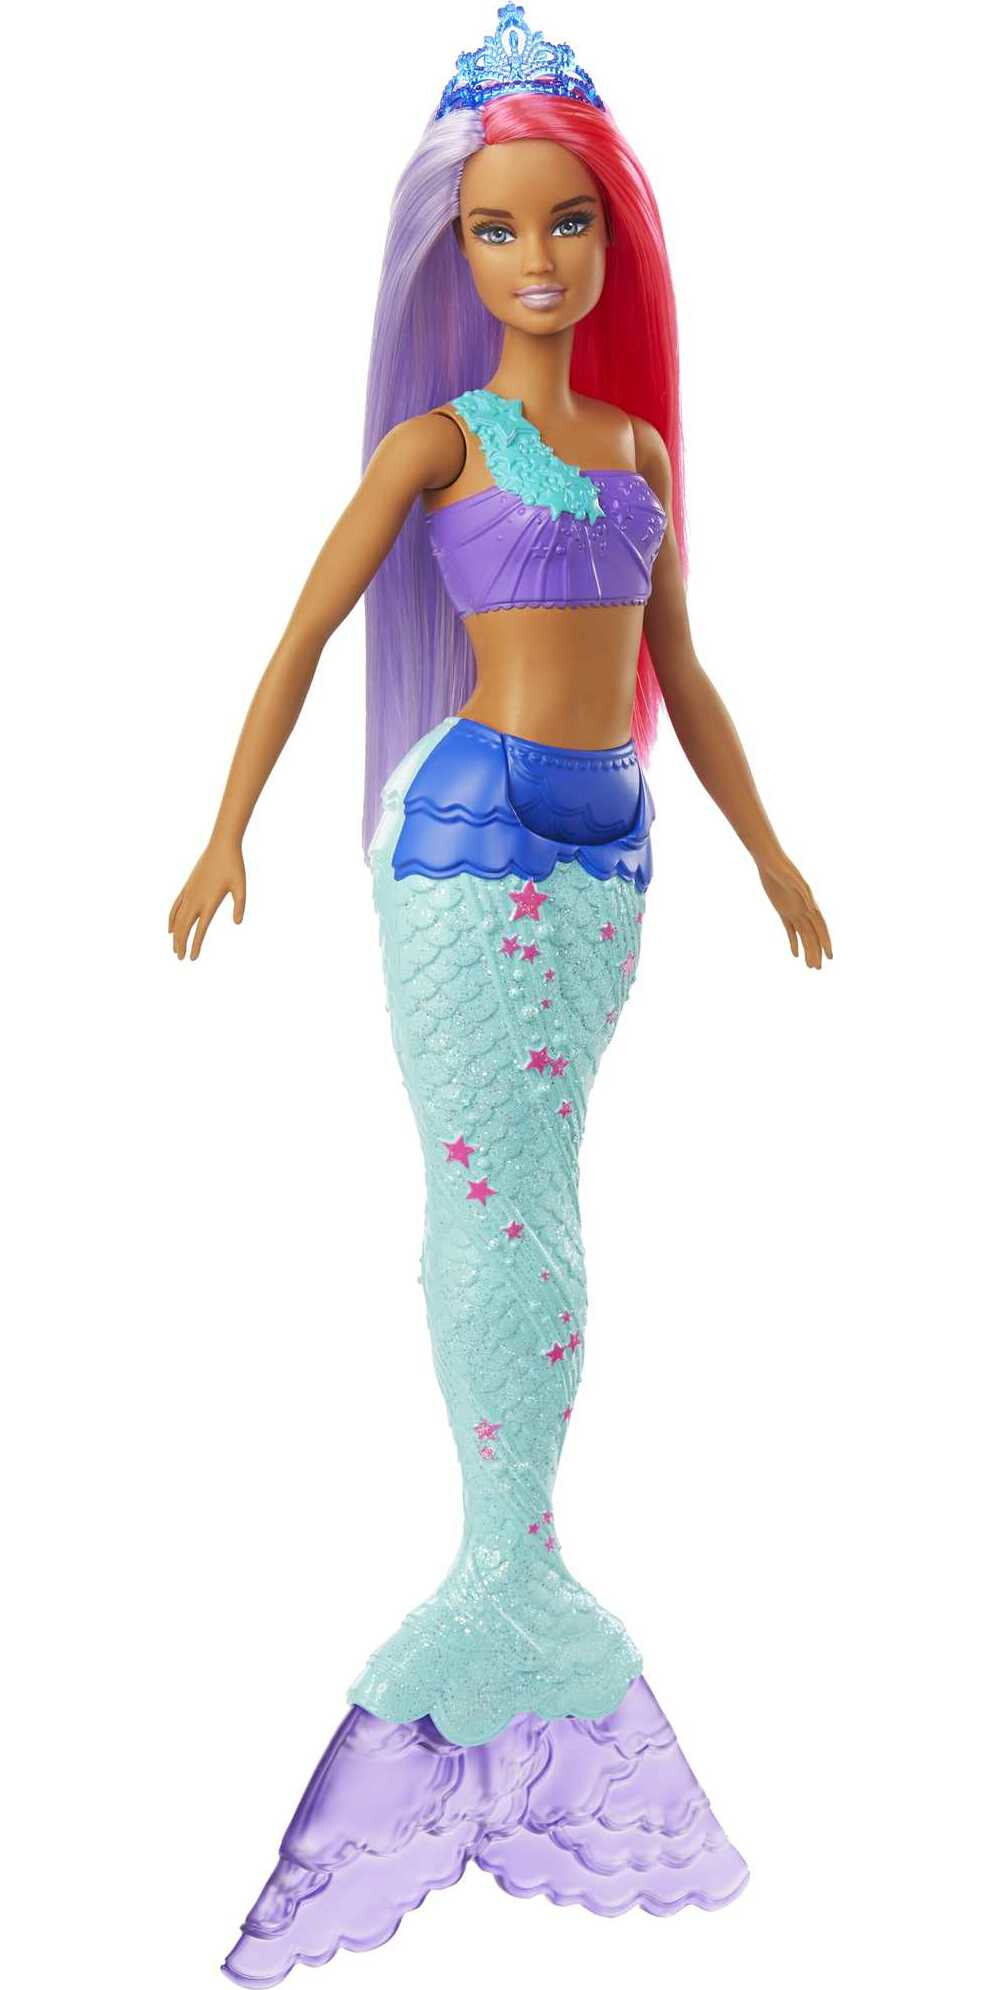 Barbie Dreamtopia Mermaid Doll, 12-inch, Pink and Purple Hair - image 1 of 6